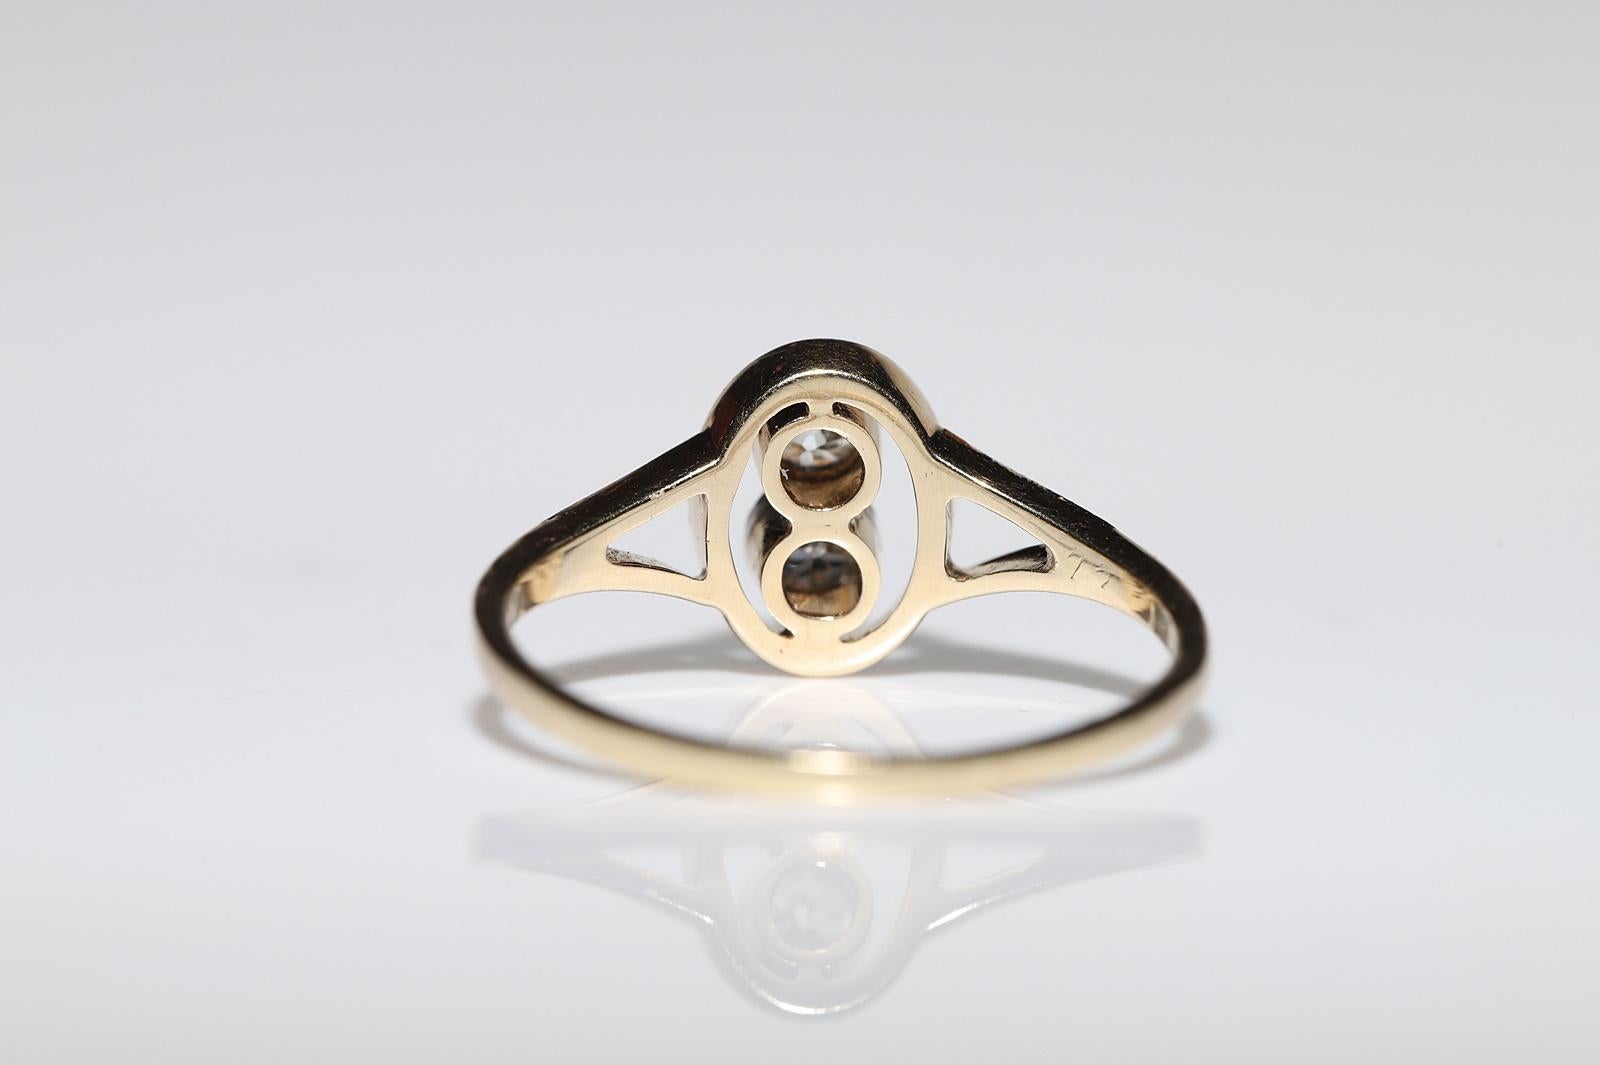 Antique Original ArtDeco Circa 1920s 14k Gold Natural Diamond Decorated Ring For Sale 3